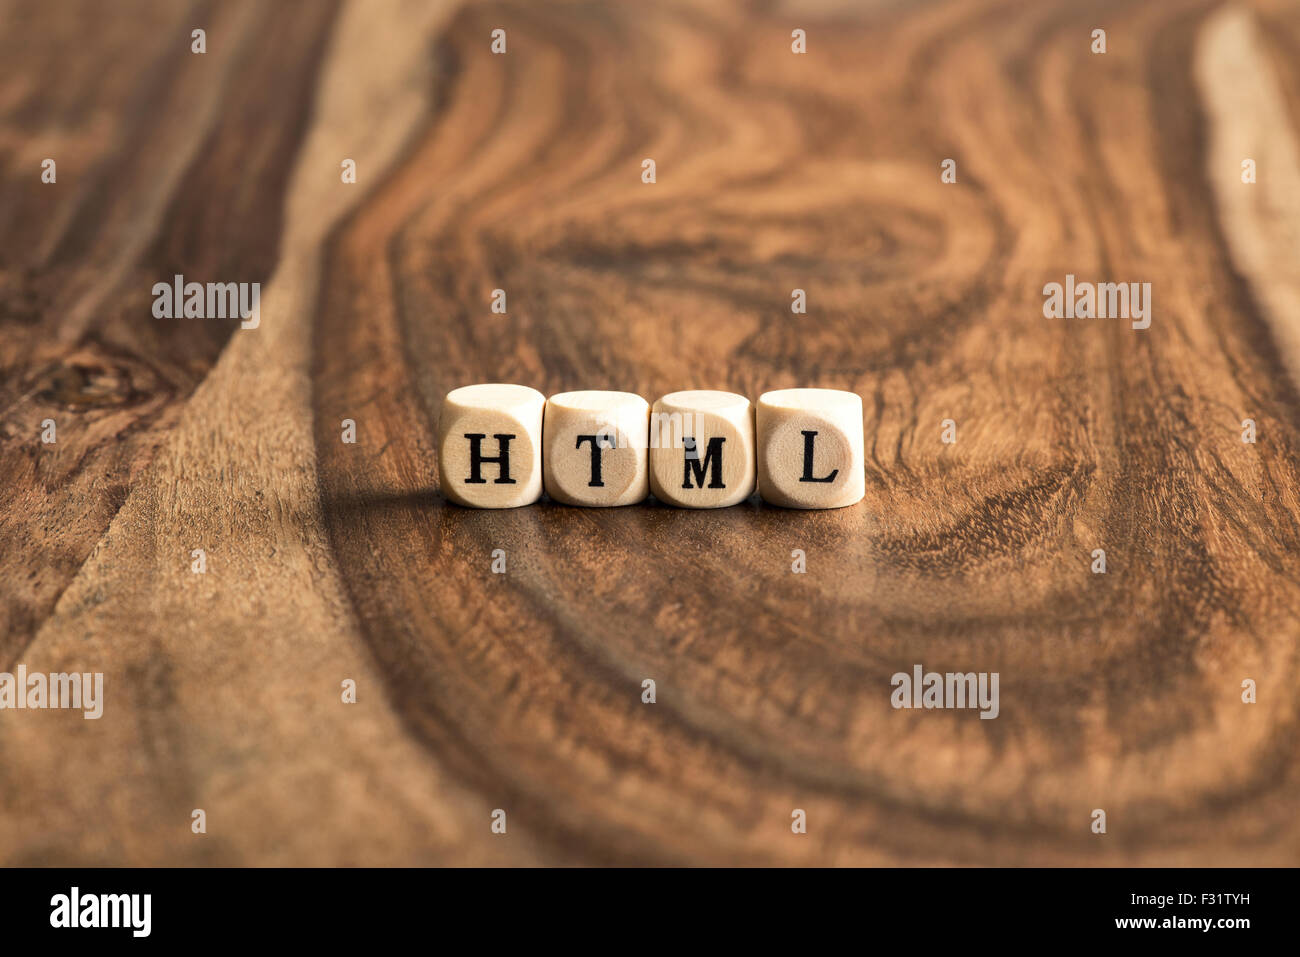 HTML word background on wood blocks Stock Photo